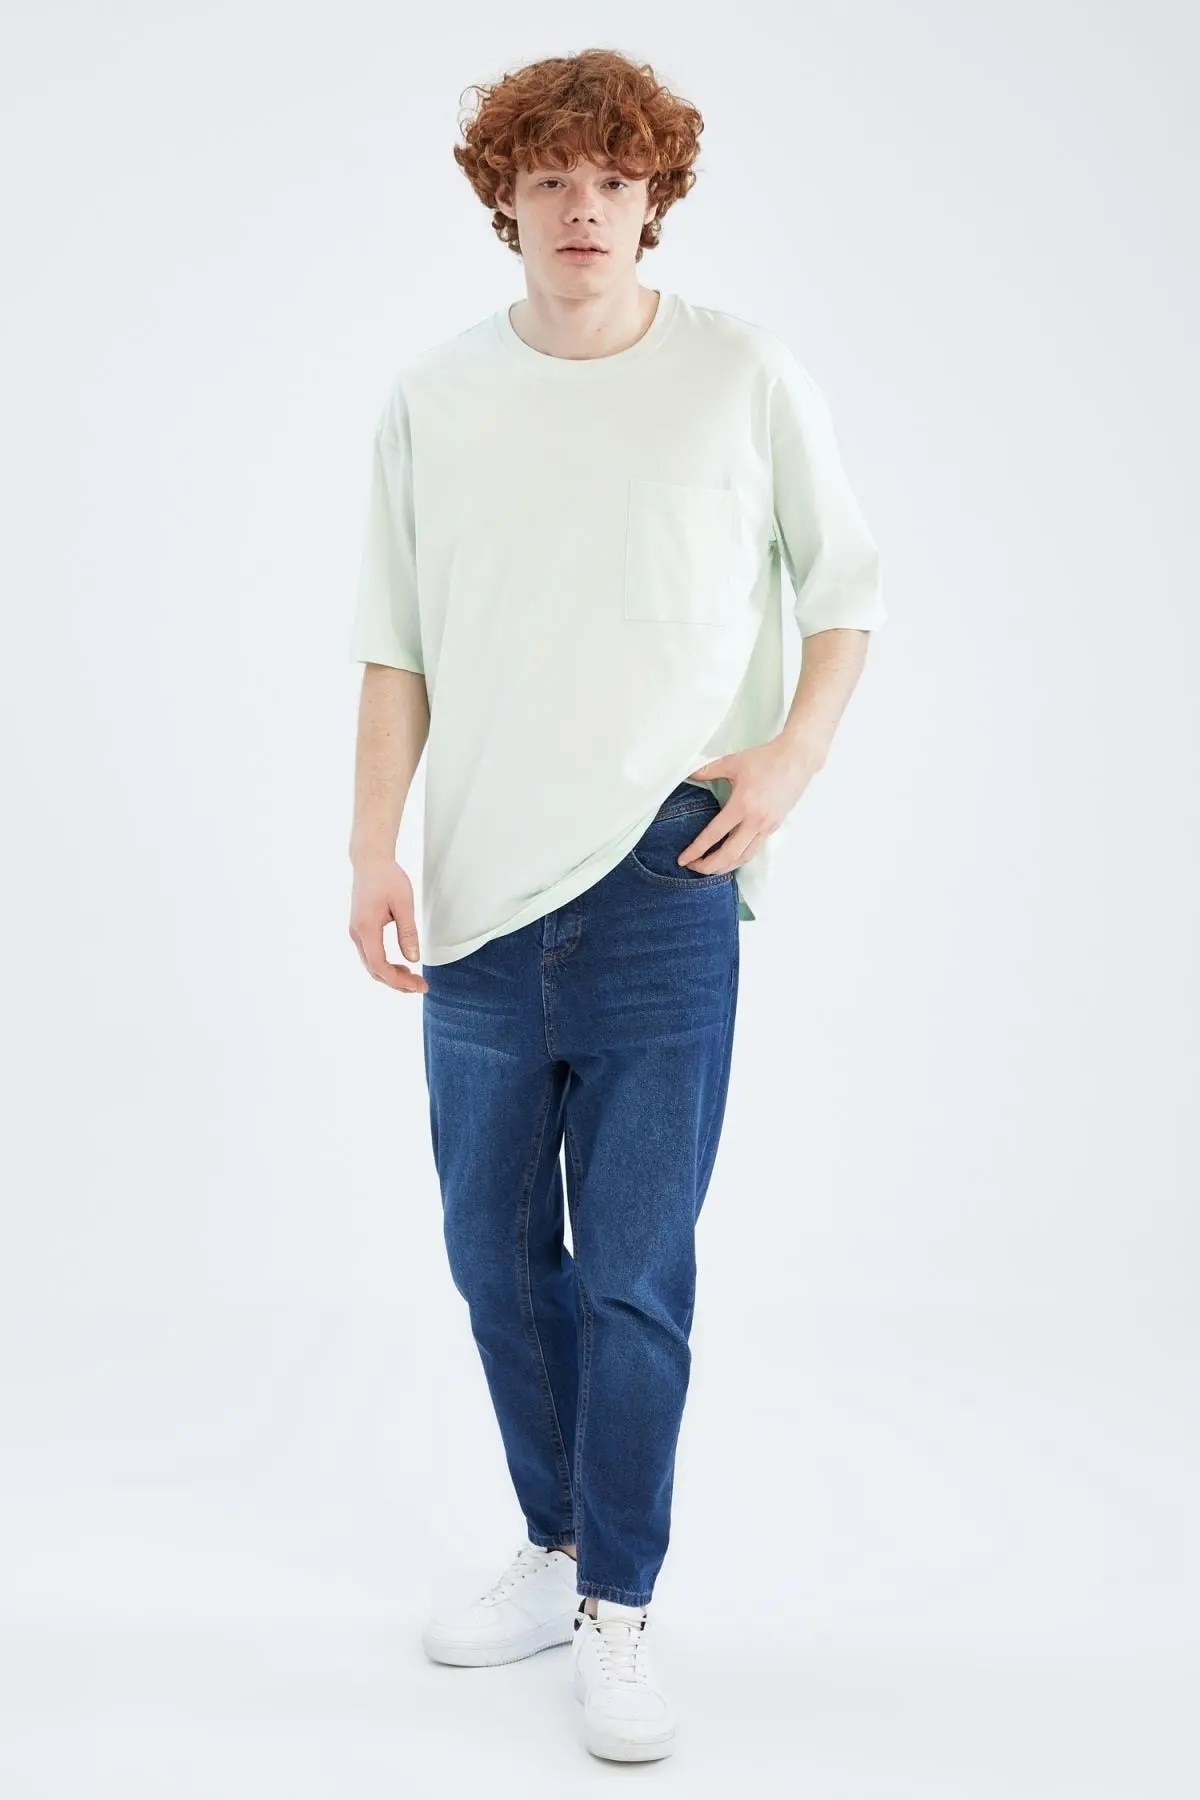 تیشرت اور سایز تک جیب مردانه سبز روشن برند Defacto 